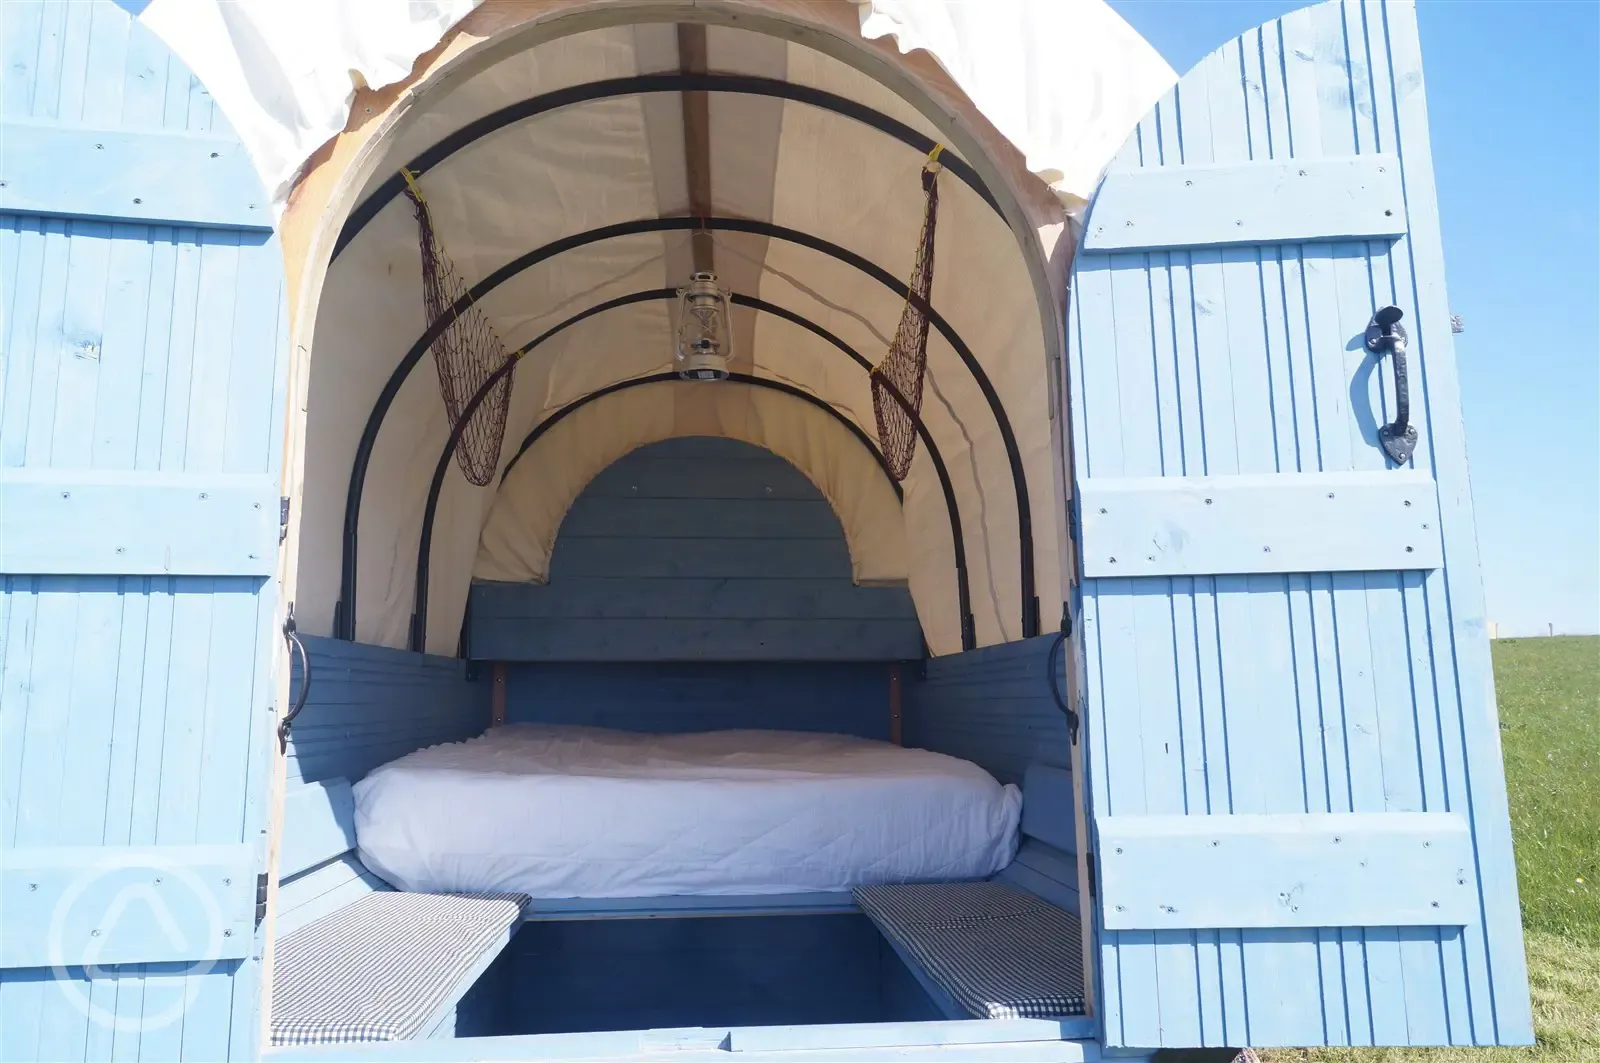 The cowboy wagon sleeps 2 incl storage with camp fire area